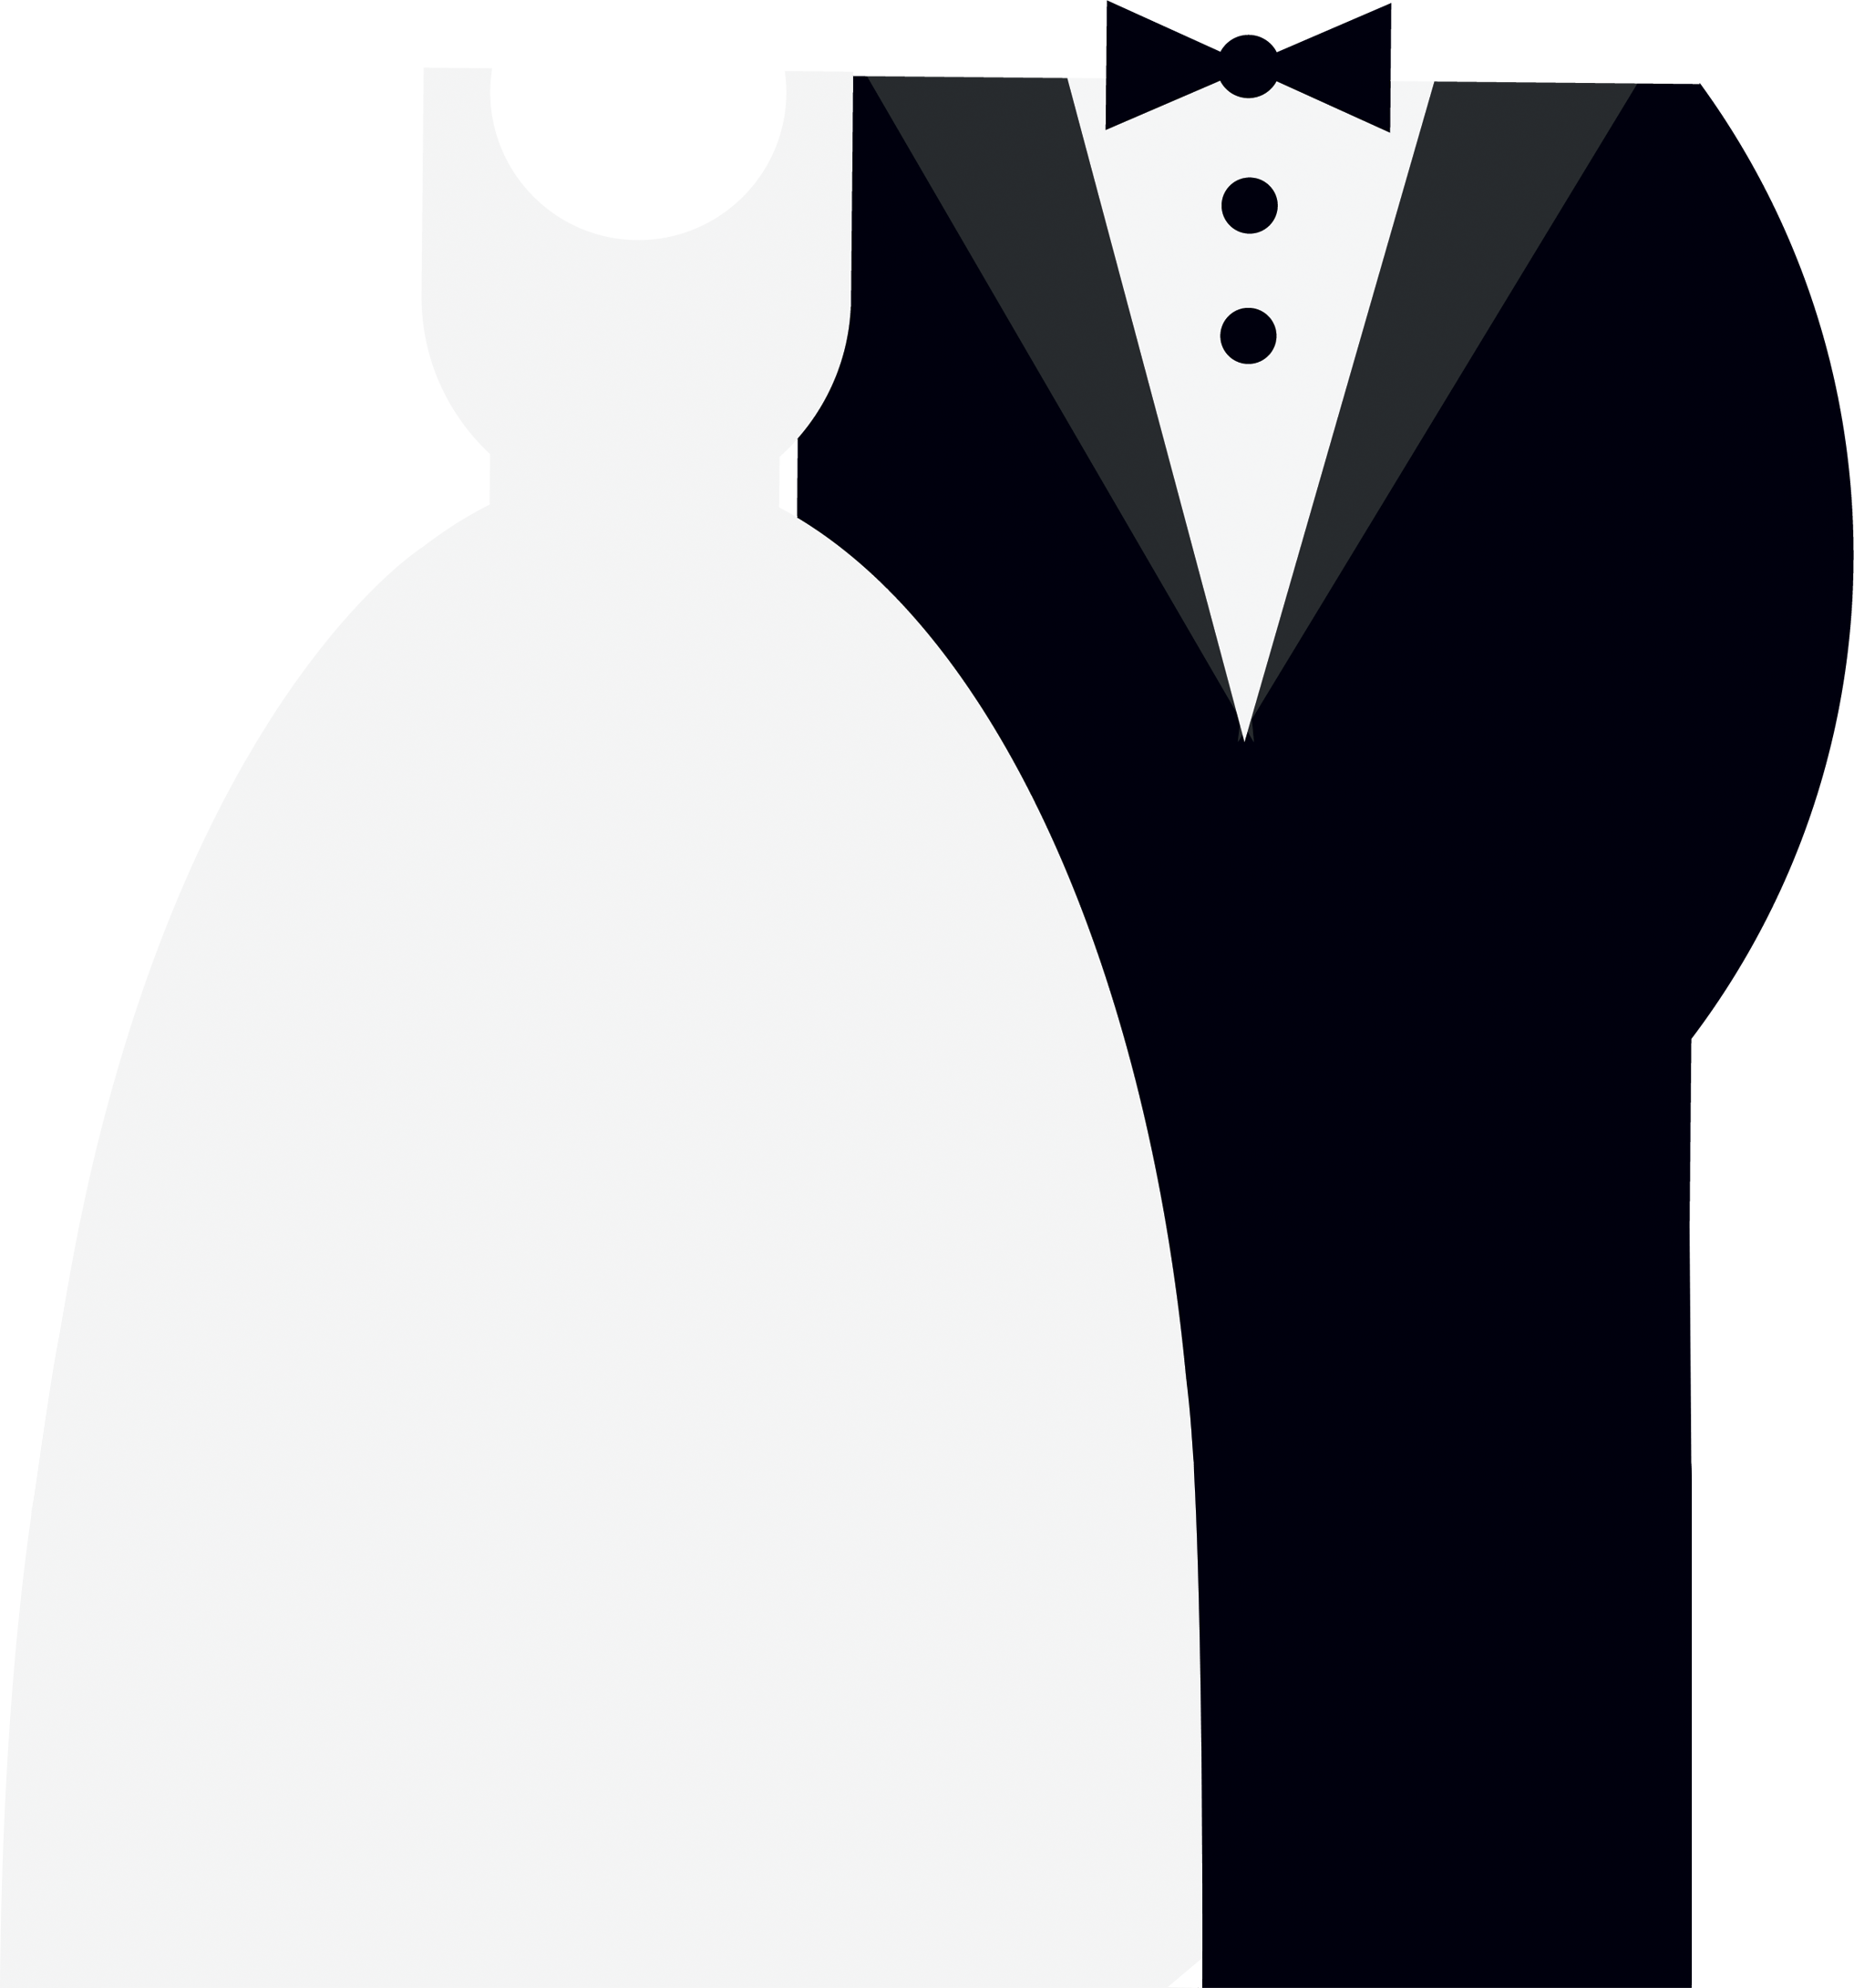 Suit clipart groom suit. Black tie silhouette at